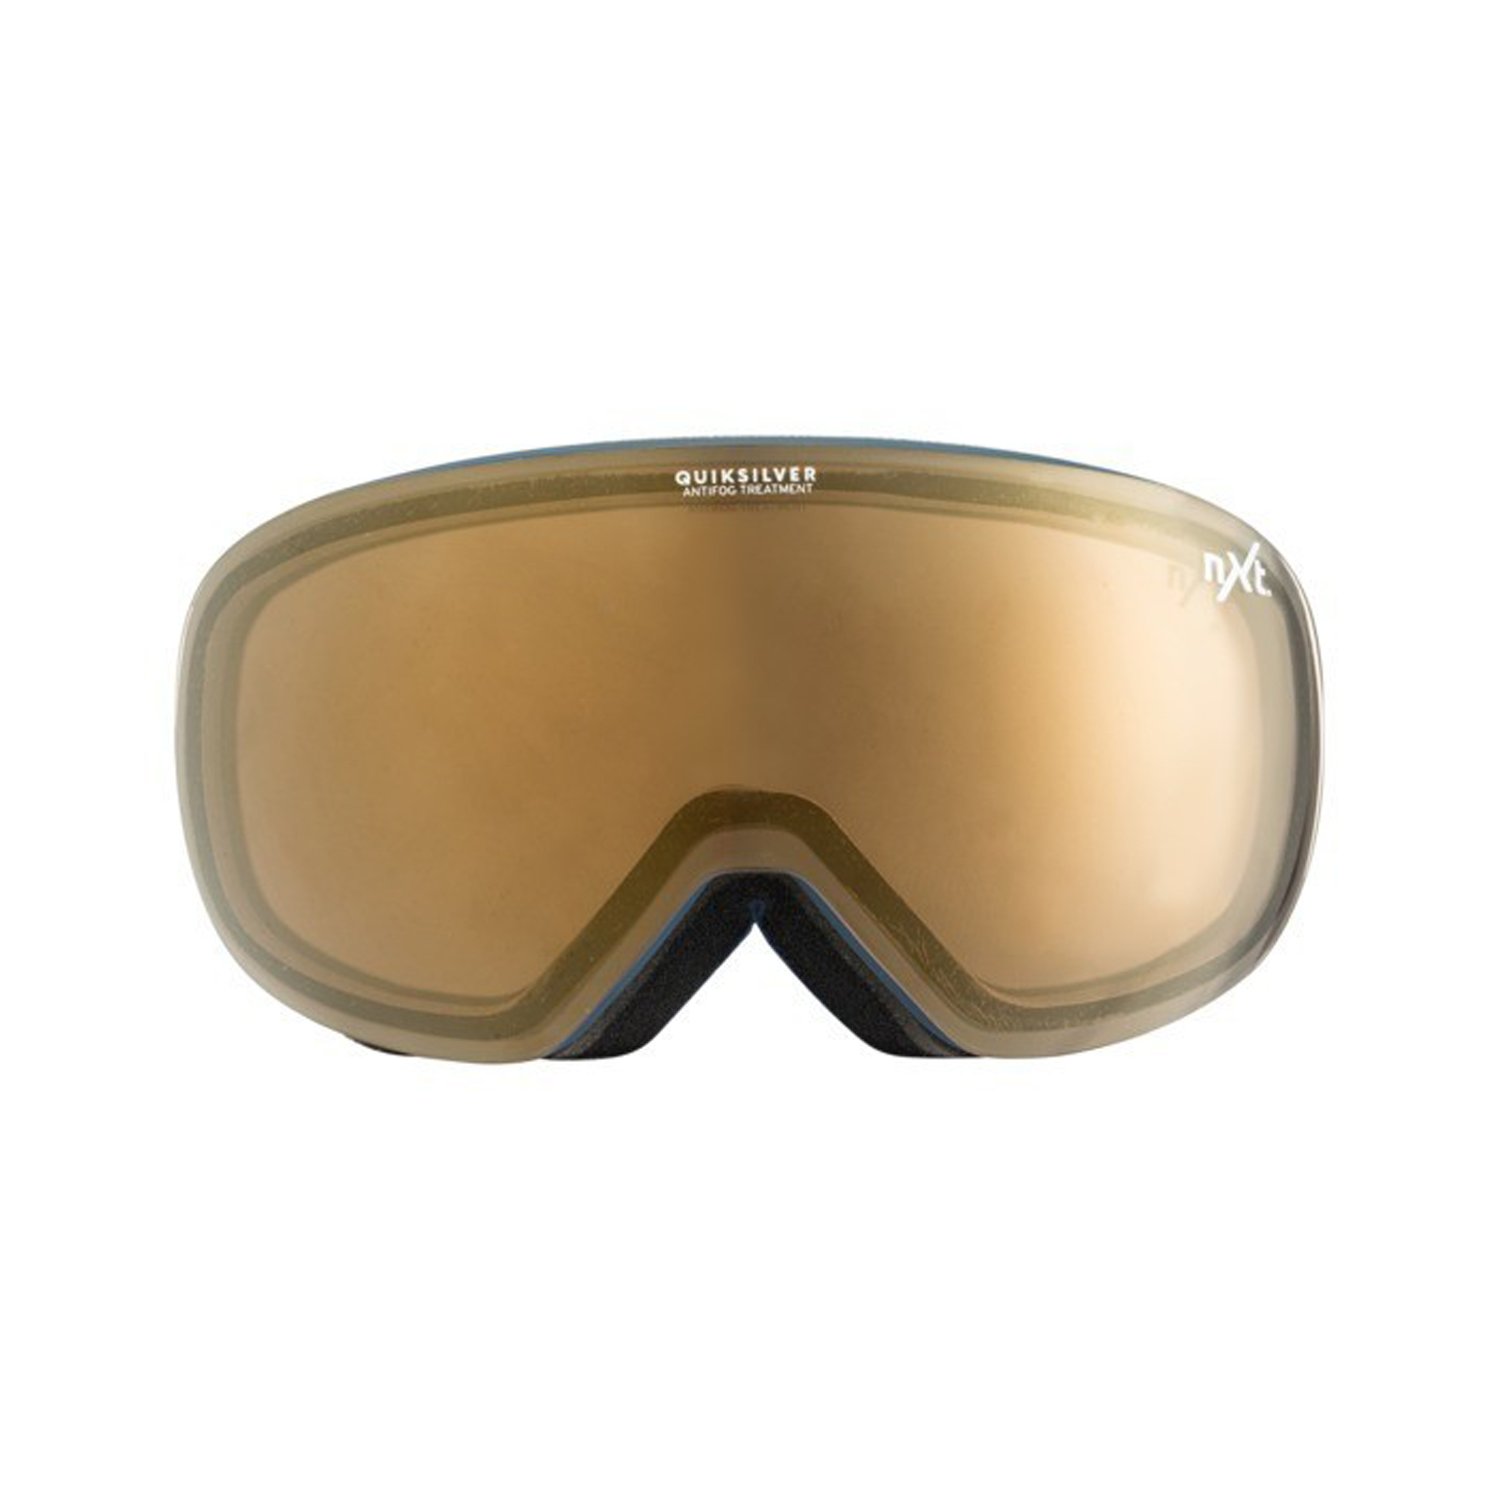 Quiksilver QSR Nxt Kayak/Snowboard Goggle - MULTİ - 1